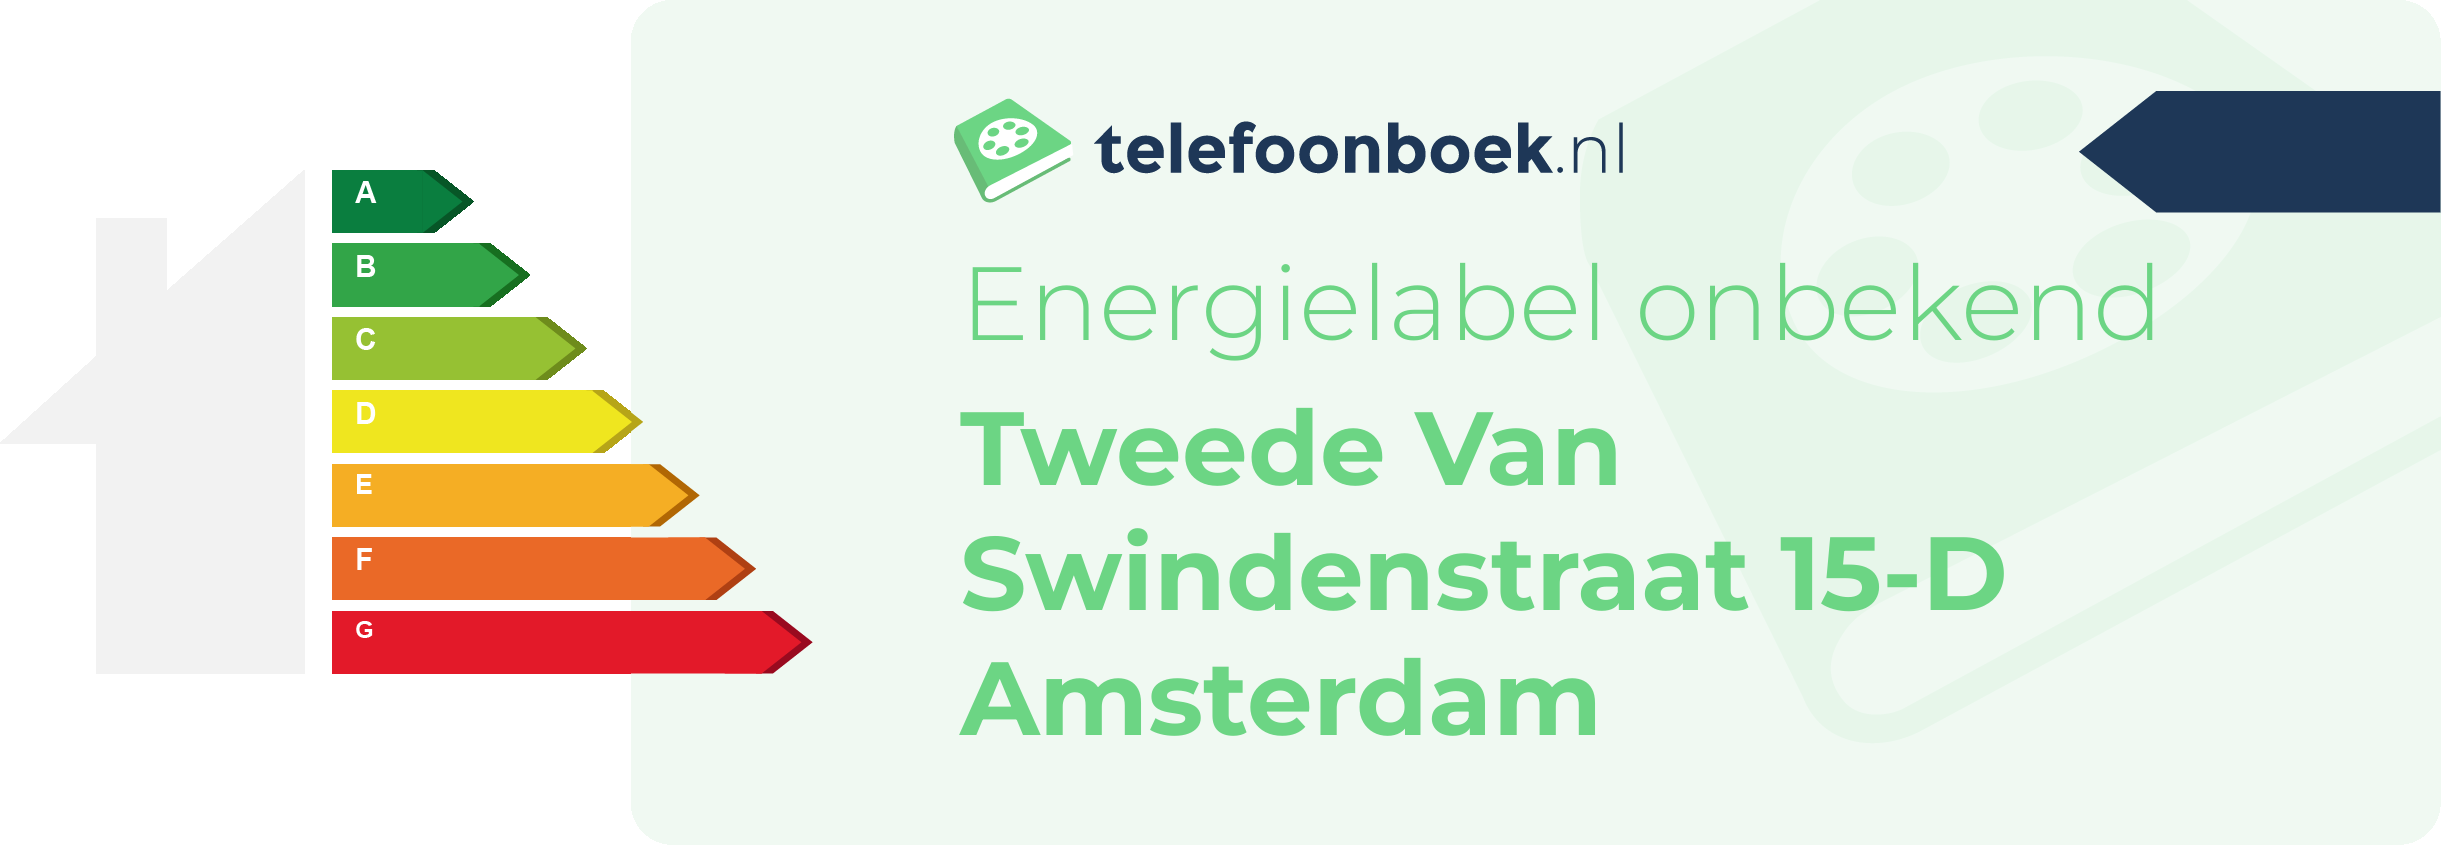 Energielabel Tweede Van Swindenstraat 15-D Amsterdam